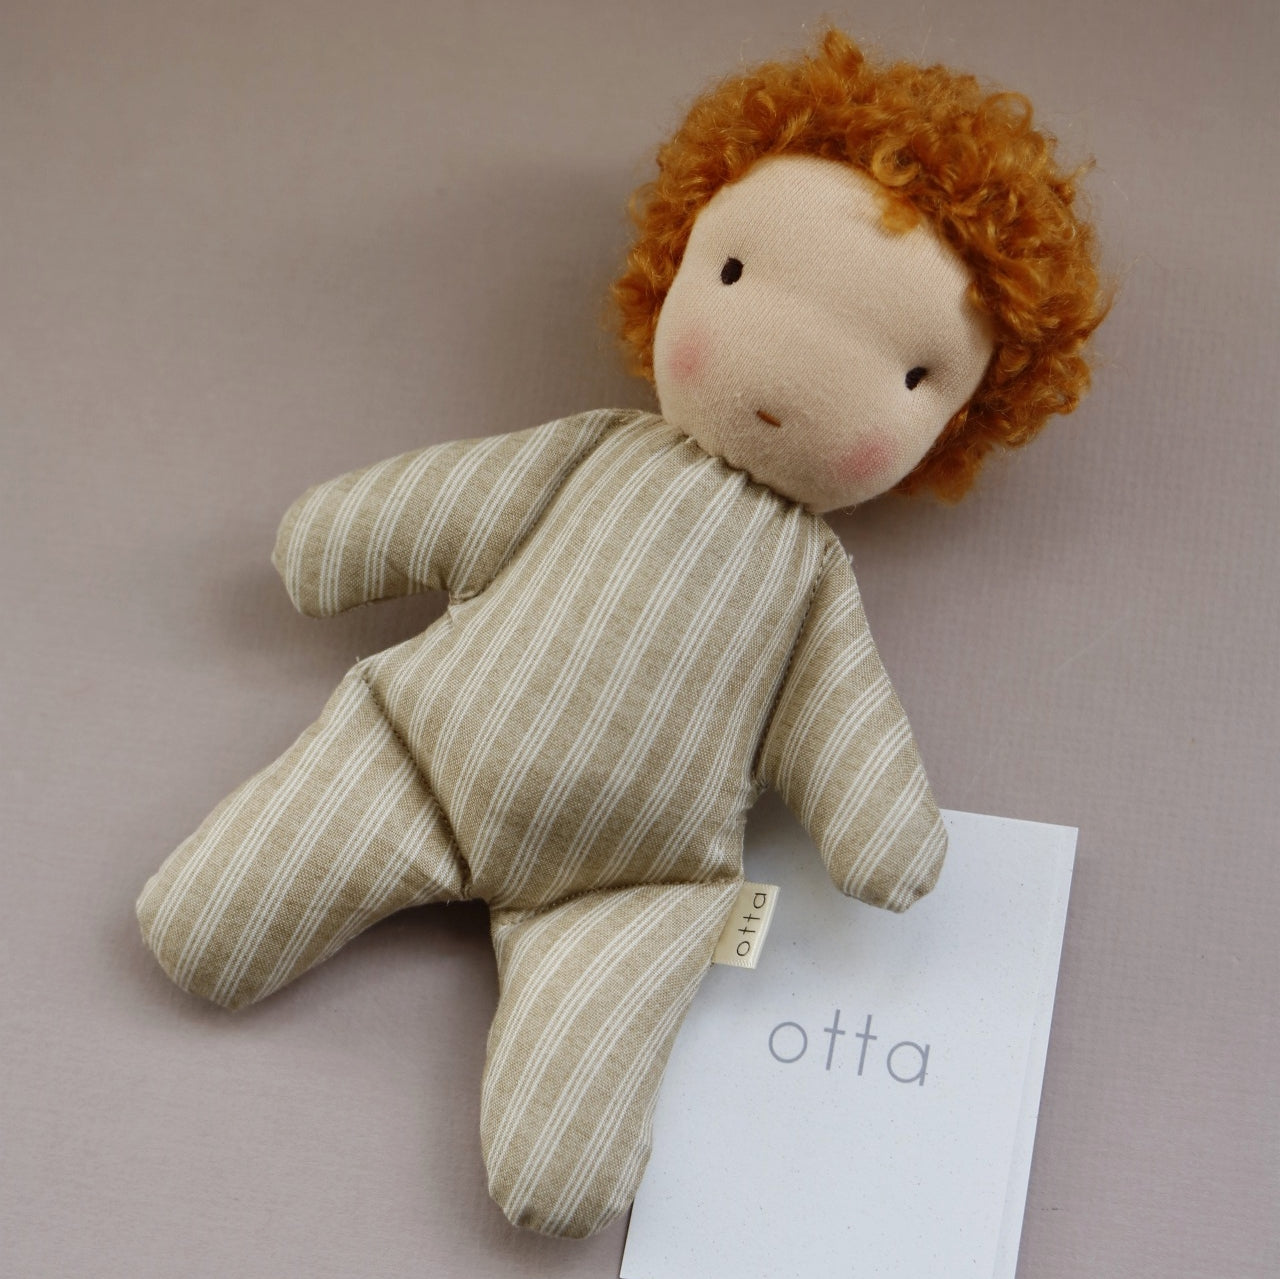 Otta Doll "Little Brother" 3